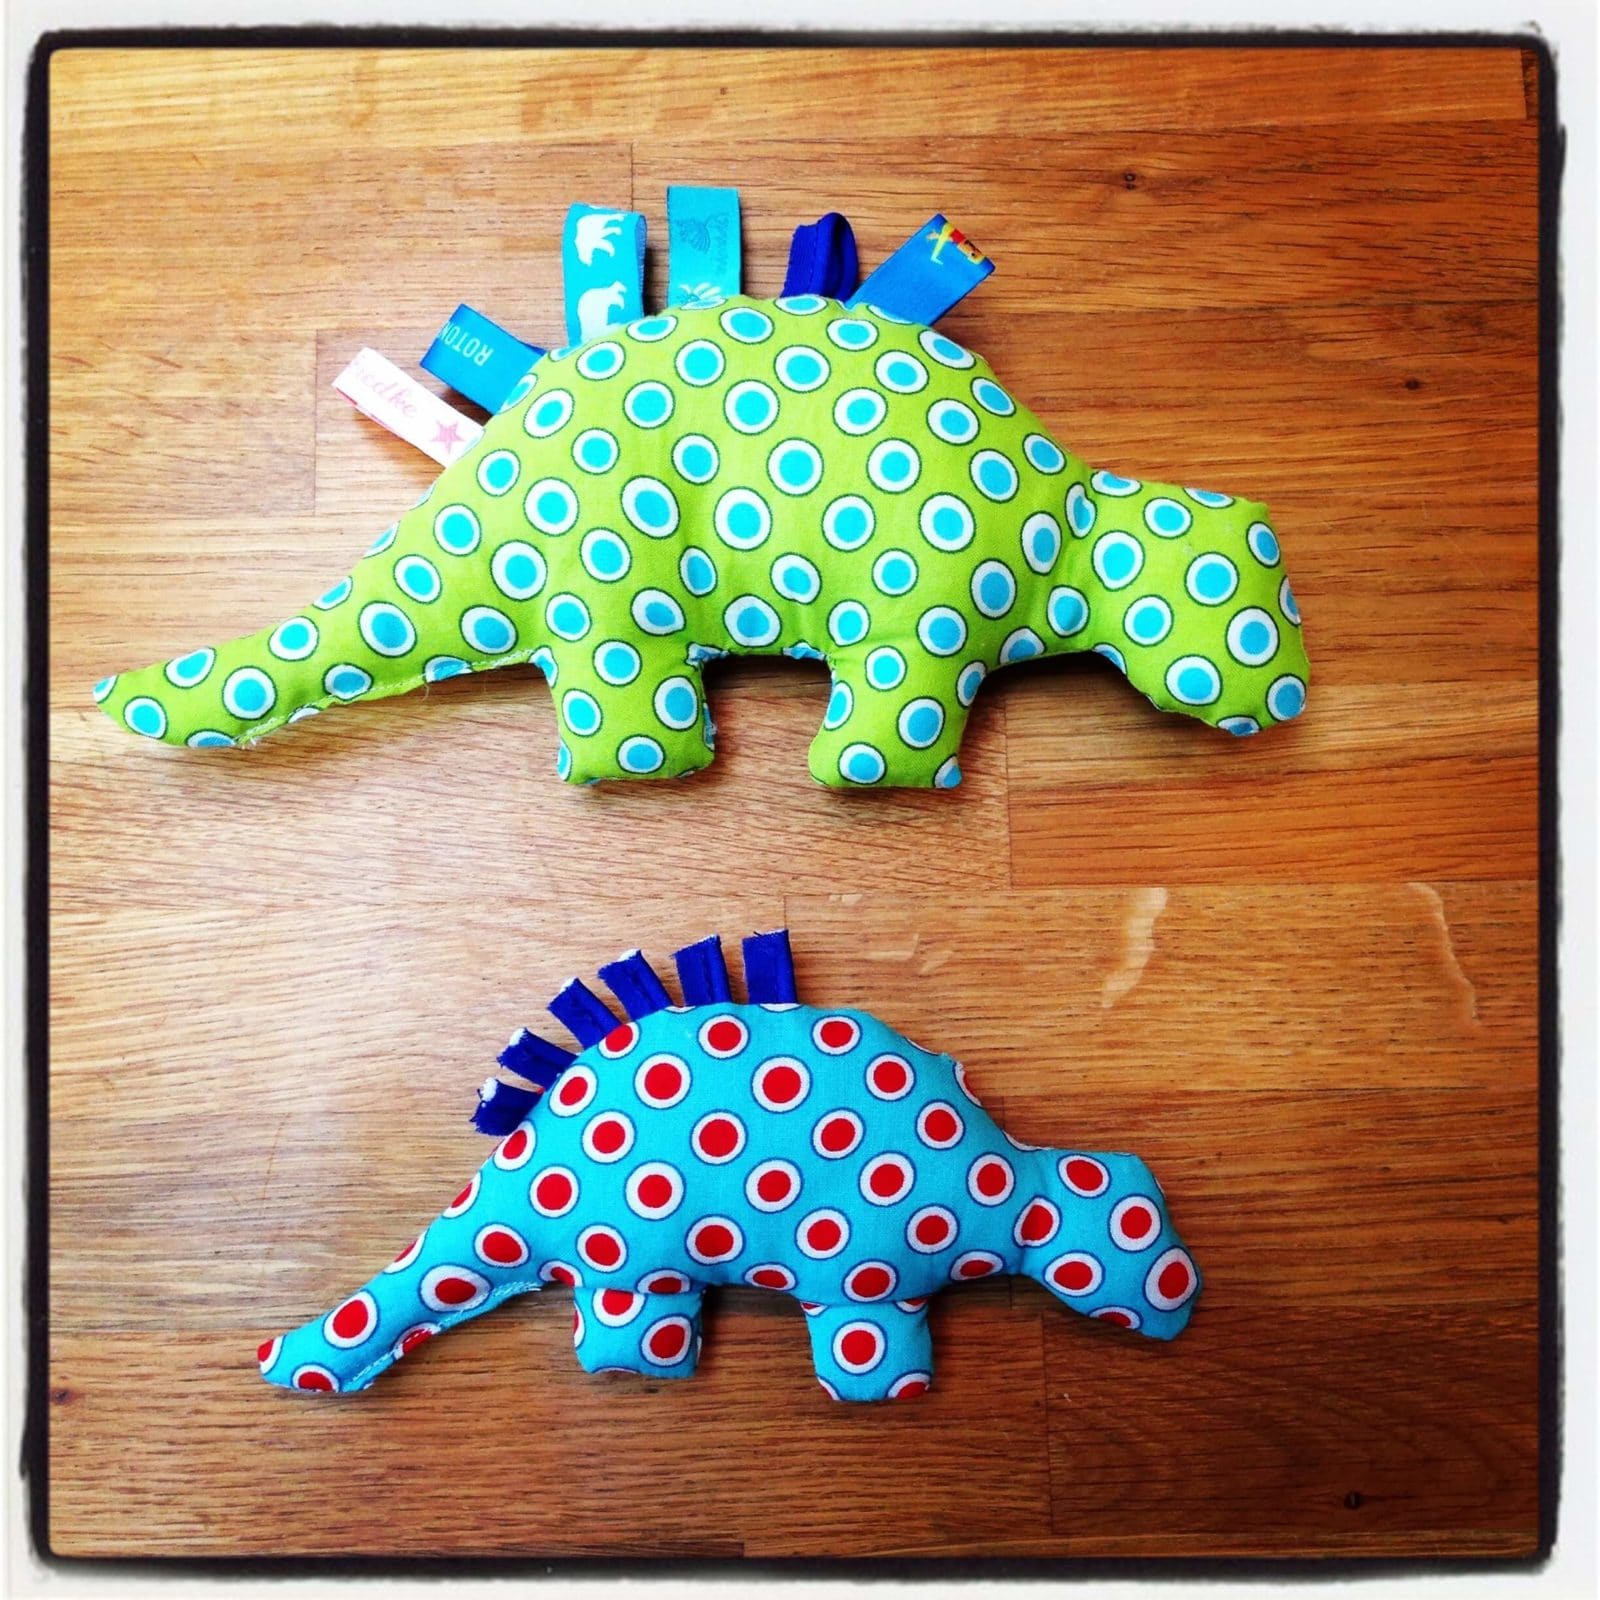 Babyschal Dinosaurier - Geschenke bei HANDMADE Kultur